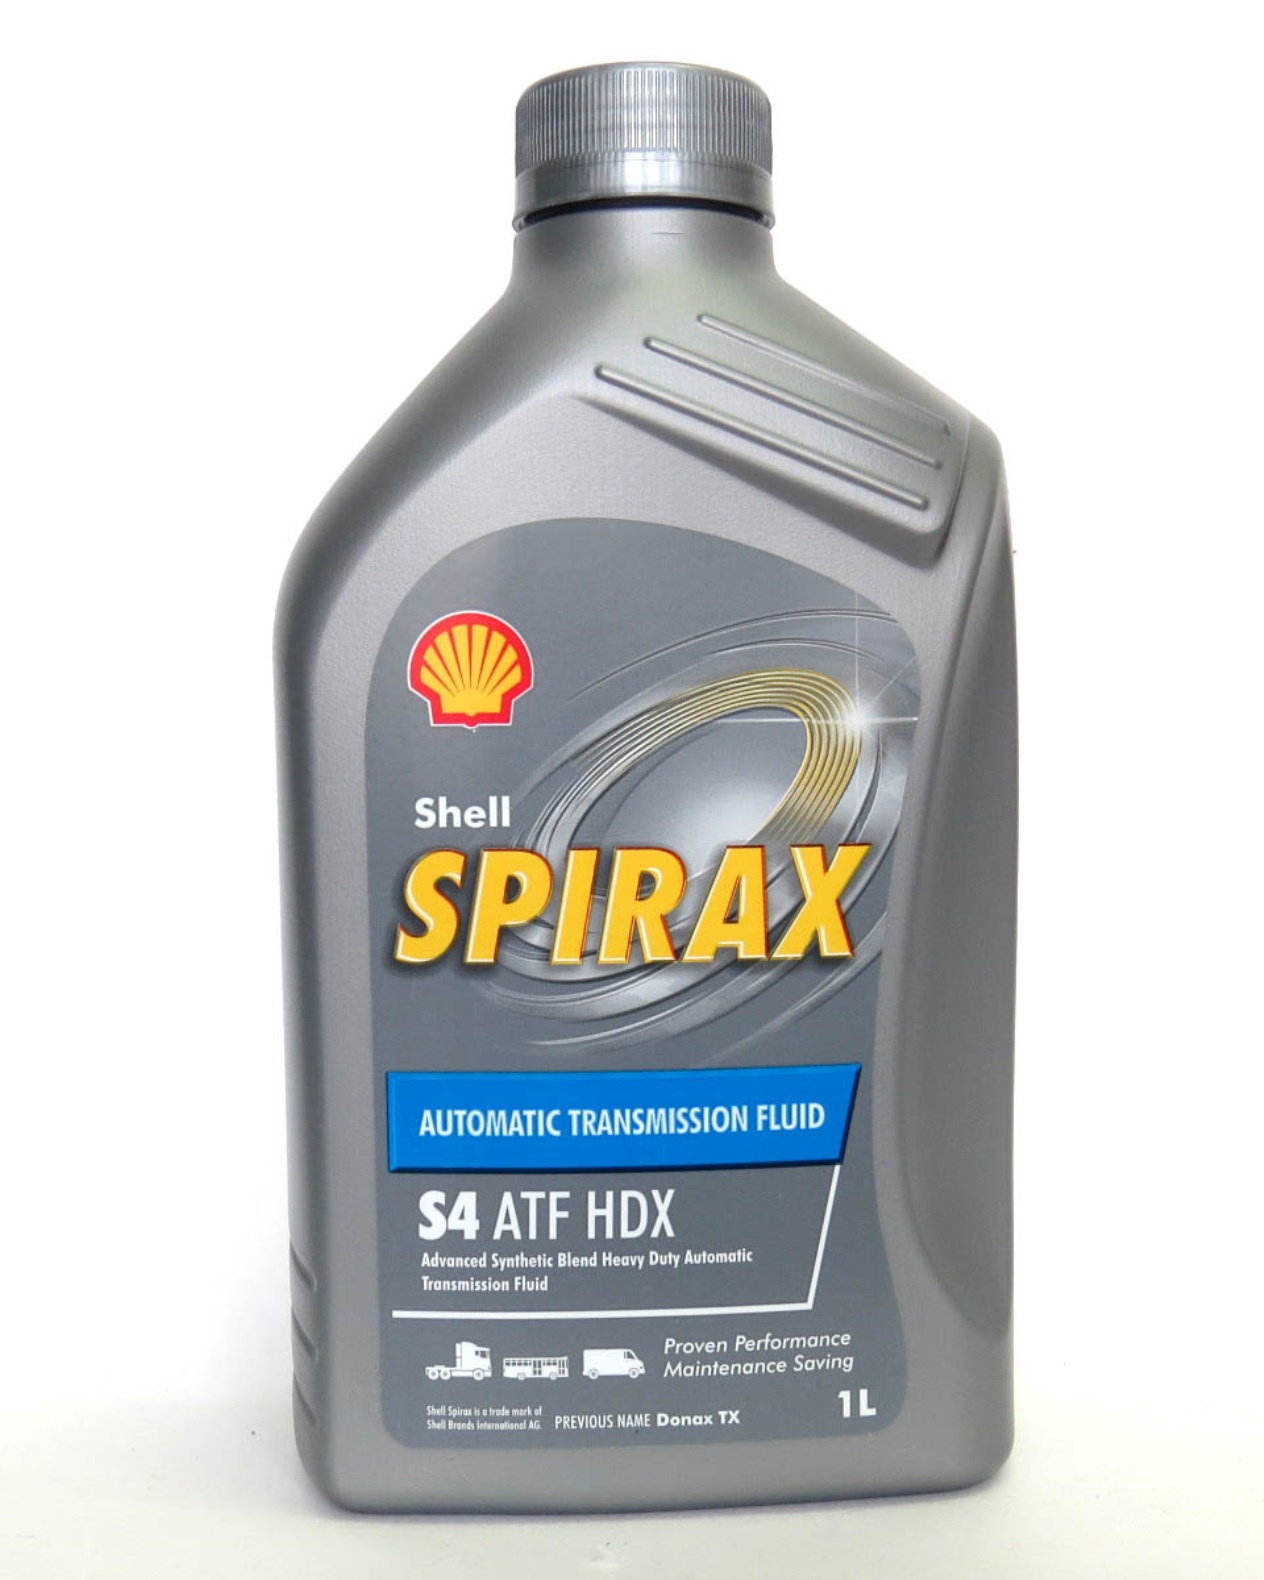 Spirax s4 atf. Shell Spirax ATF 4. S4 ATF hdx Shell. Shell Spirax s4 ATF hdx. Shell Spirax s4 ATF hdx, 1л.